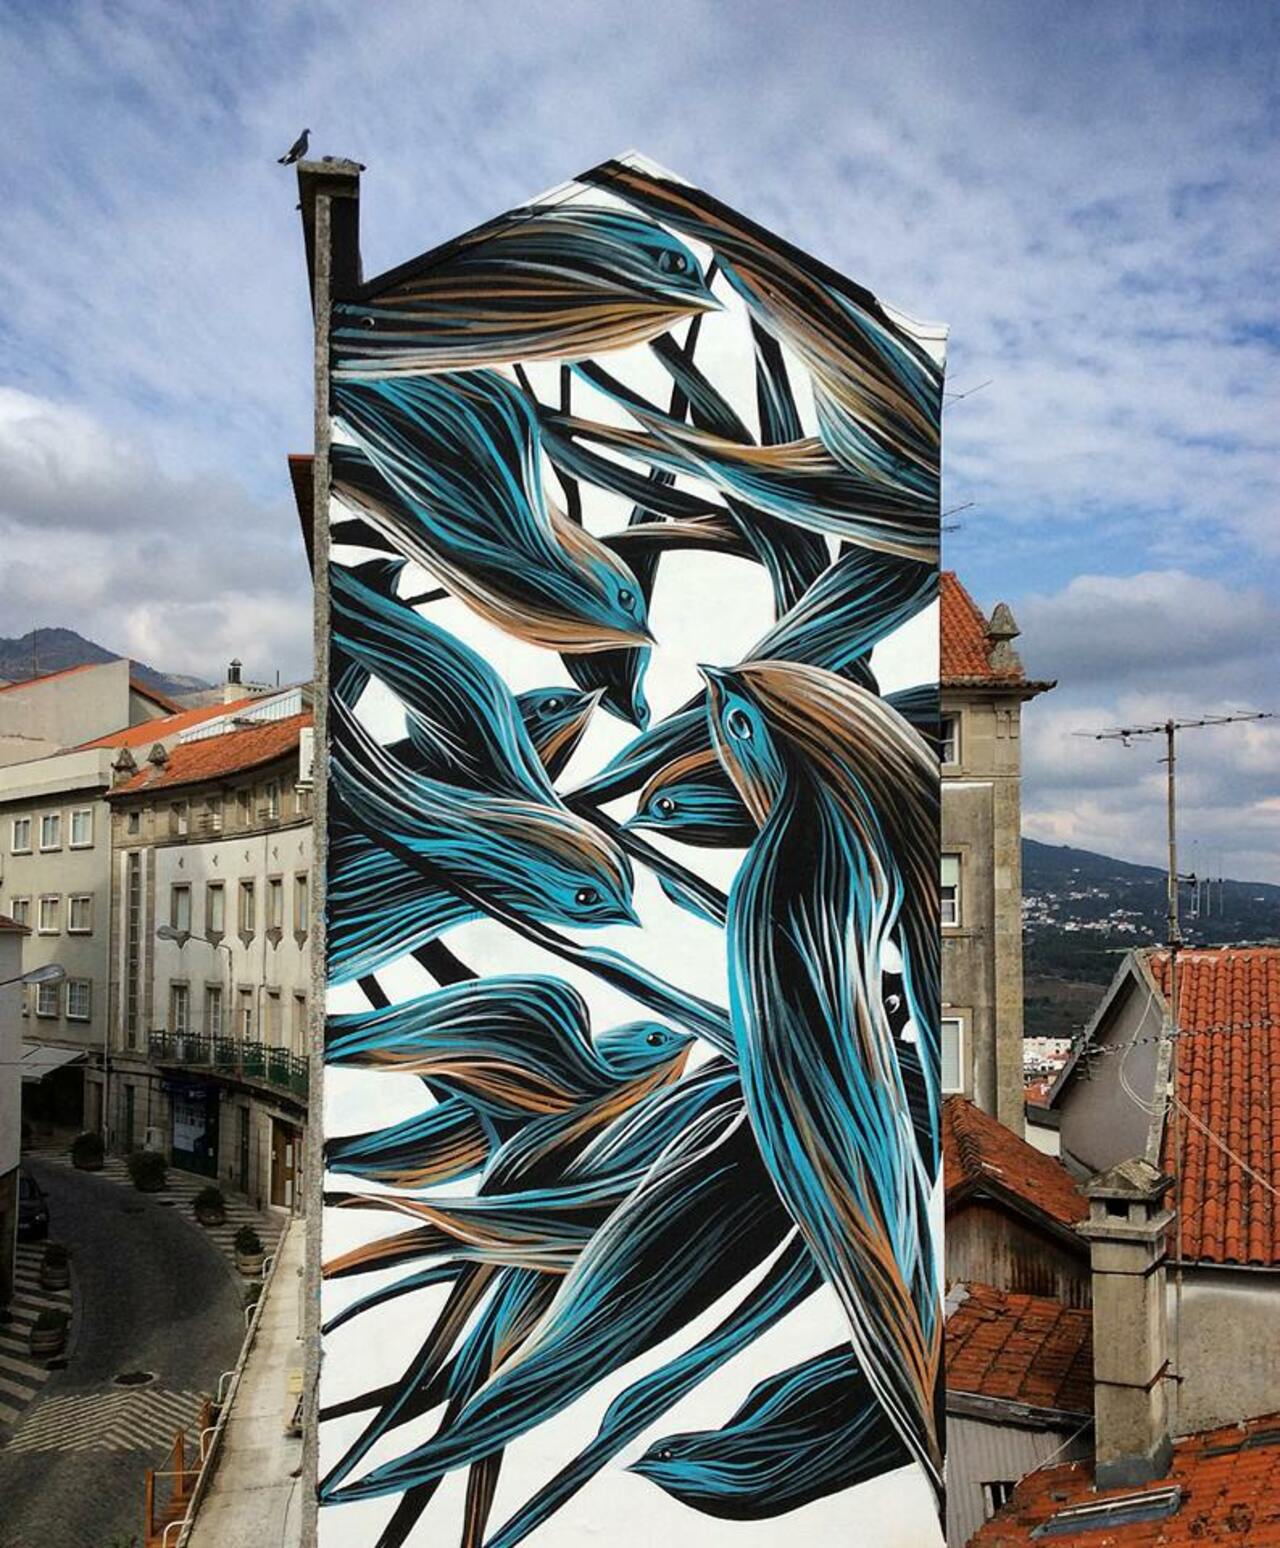 RT @allcitycanvas: A beautiful new piece by artist #Pantonio in Covilhã, #Portugal #mural #streetart #graffiti #urbanart https://t.co/G8NlUuWcjk